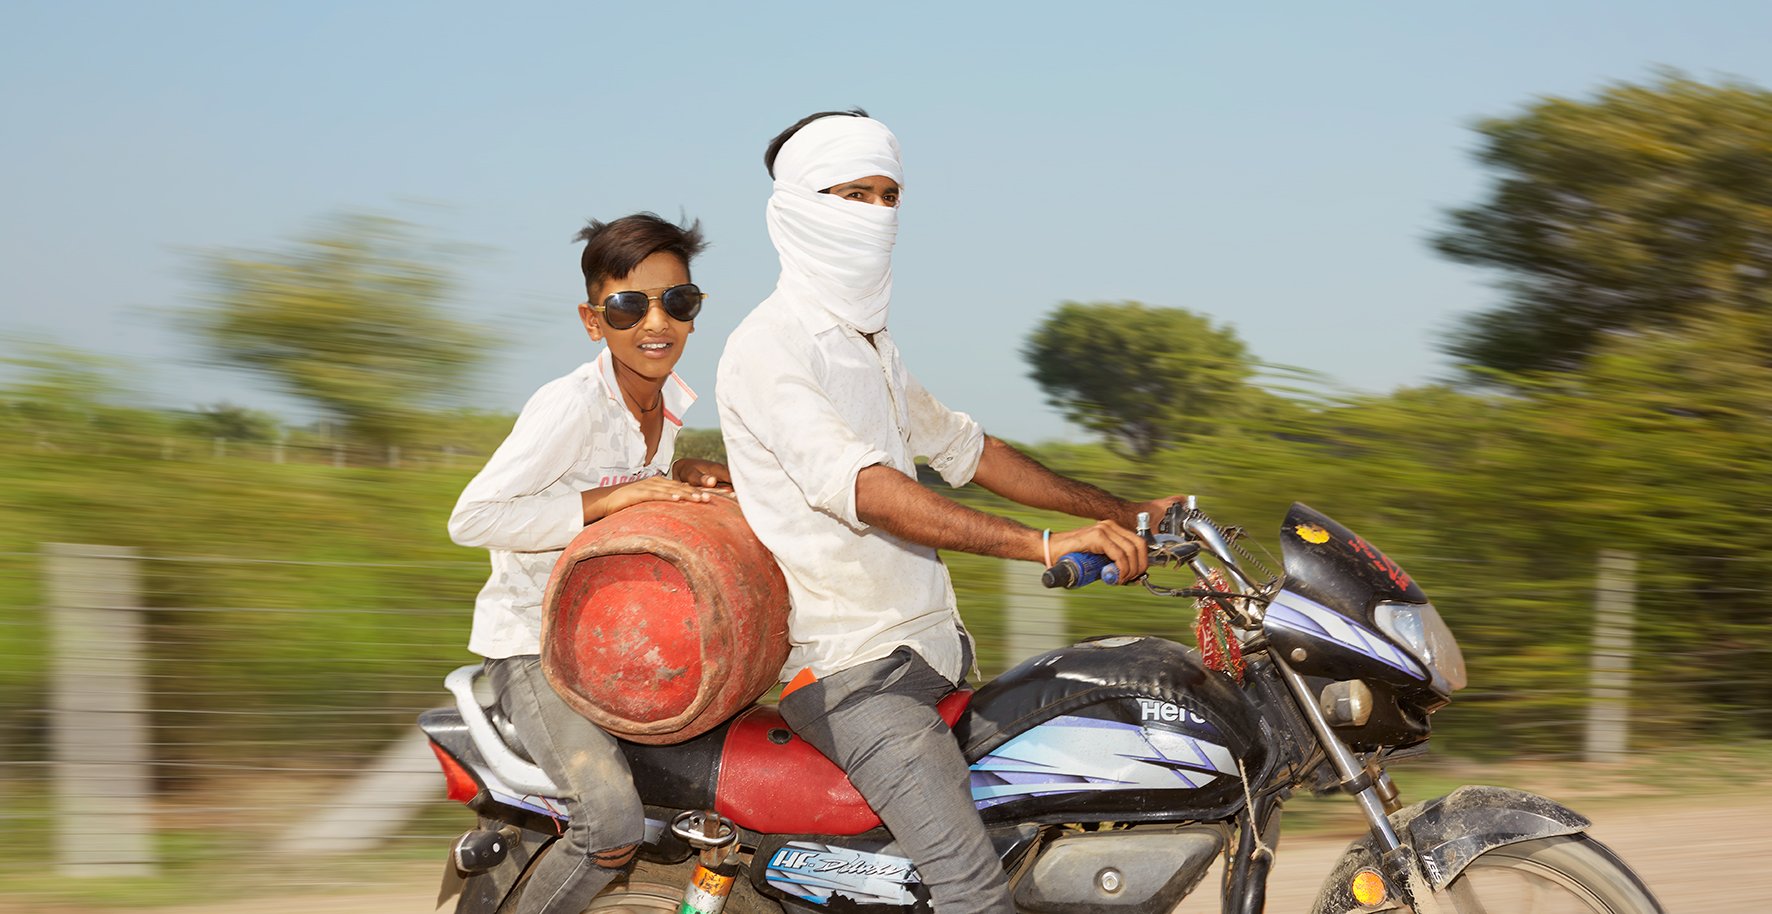   Highway Heroes / India  